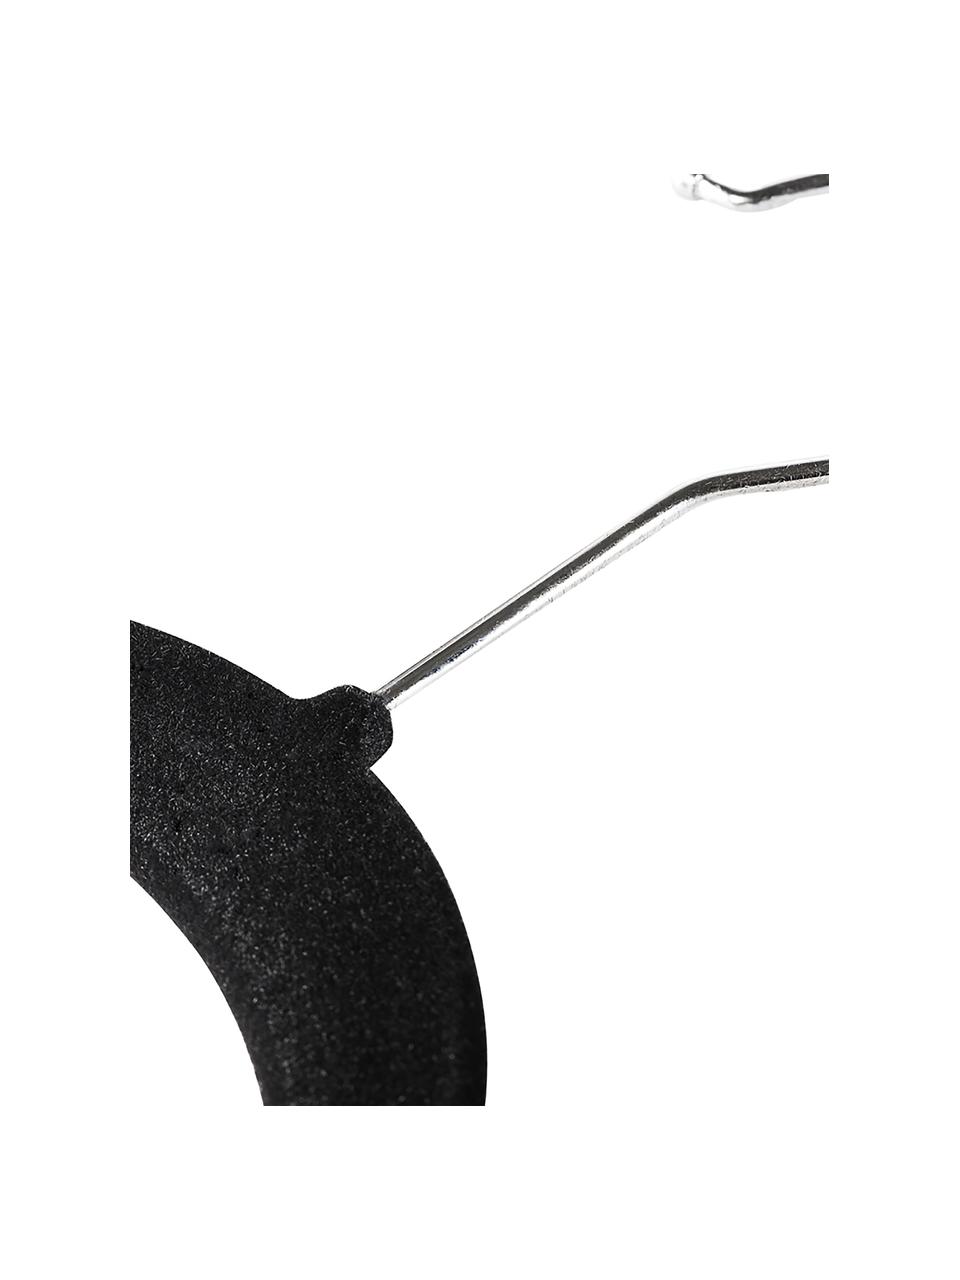 Kleiderbügel Black Velvet, 12 Stück, Haken: Metall, Bezug: Nylonbeflockung, Schwarz, B 42 x H 25 cm